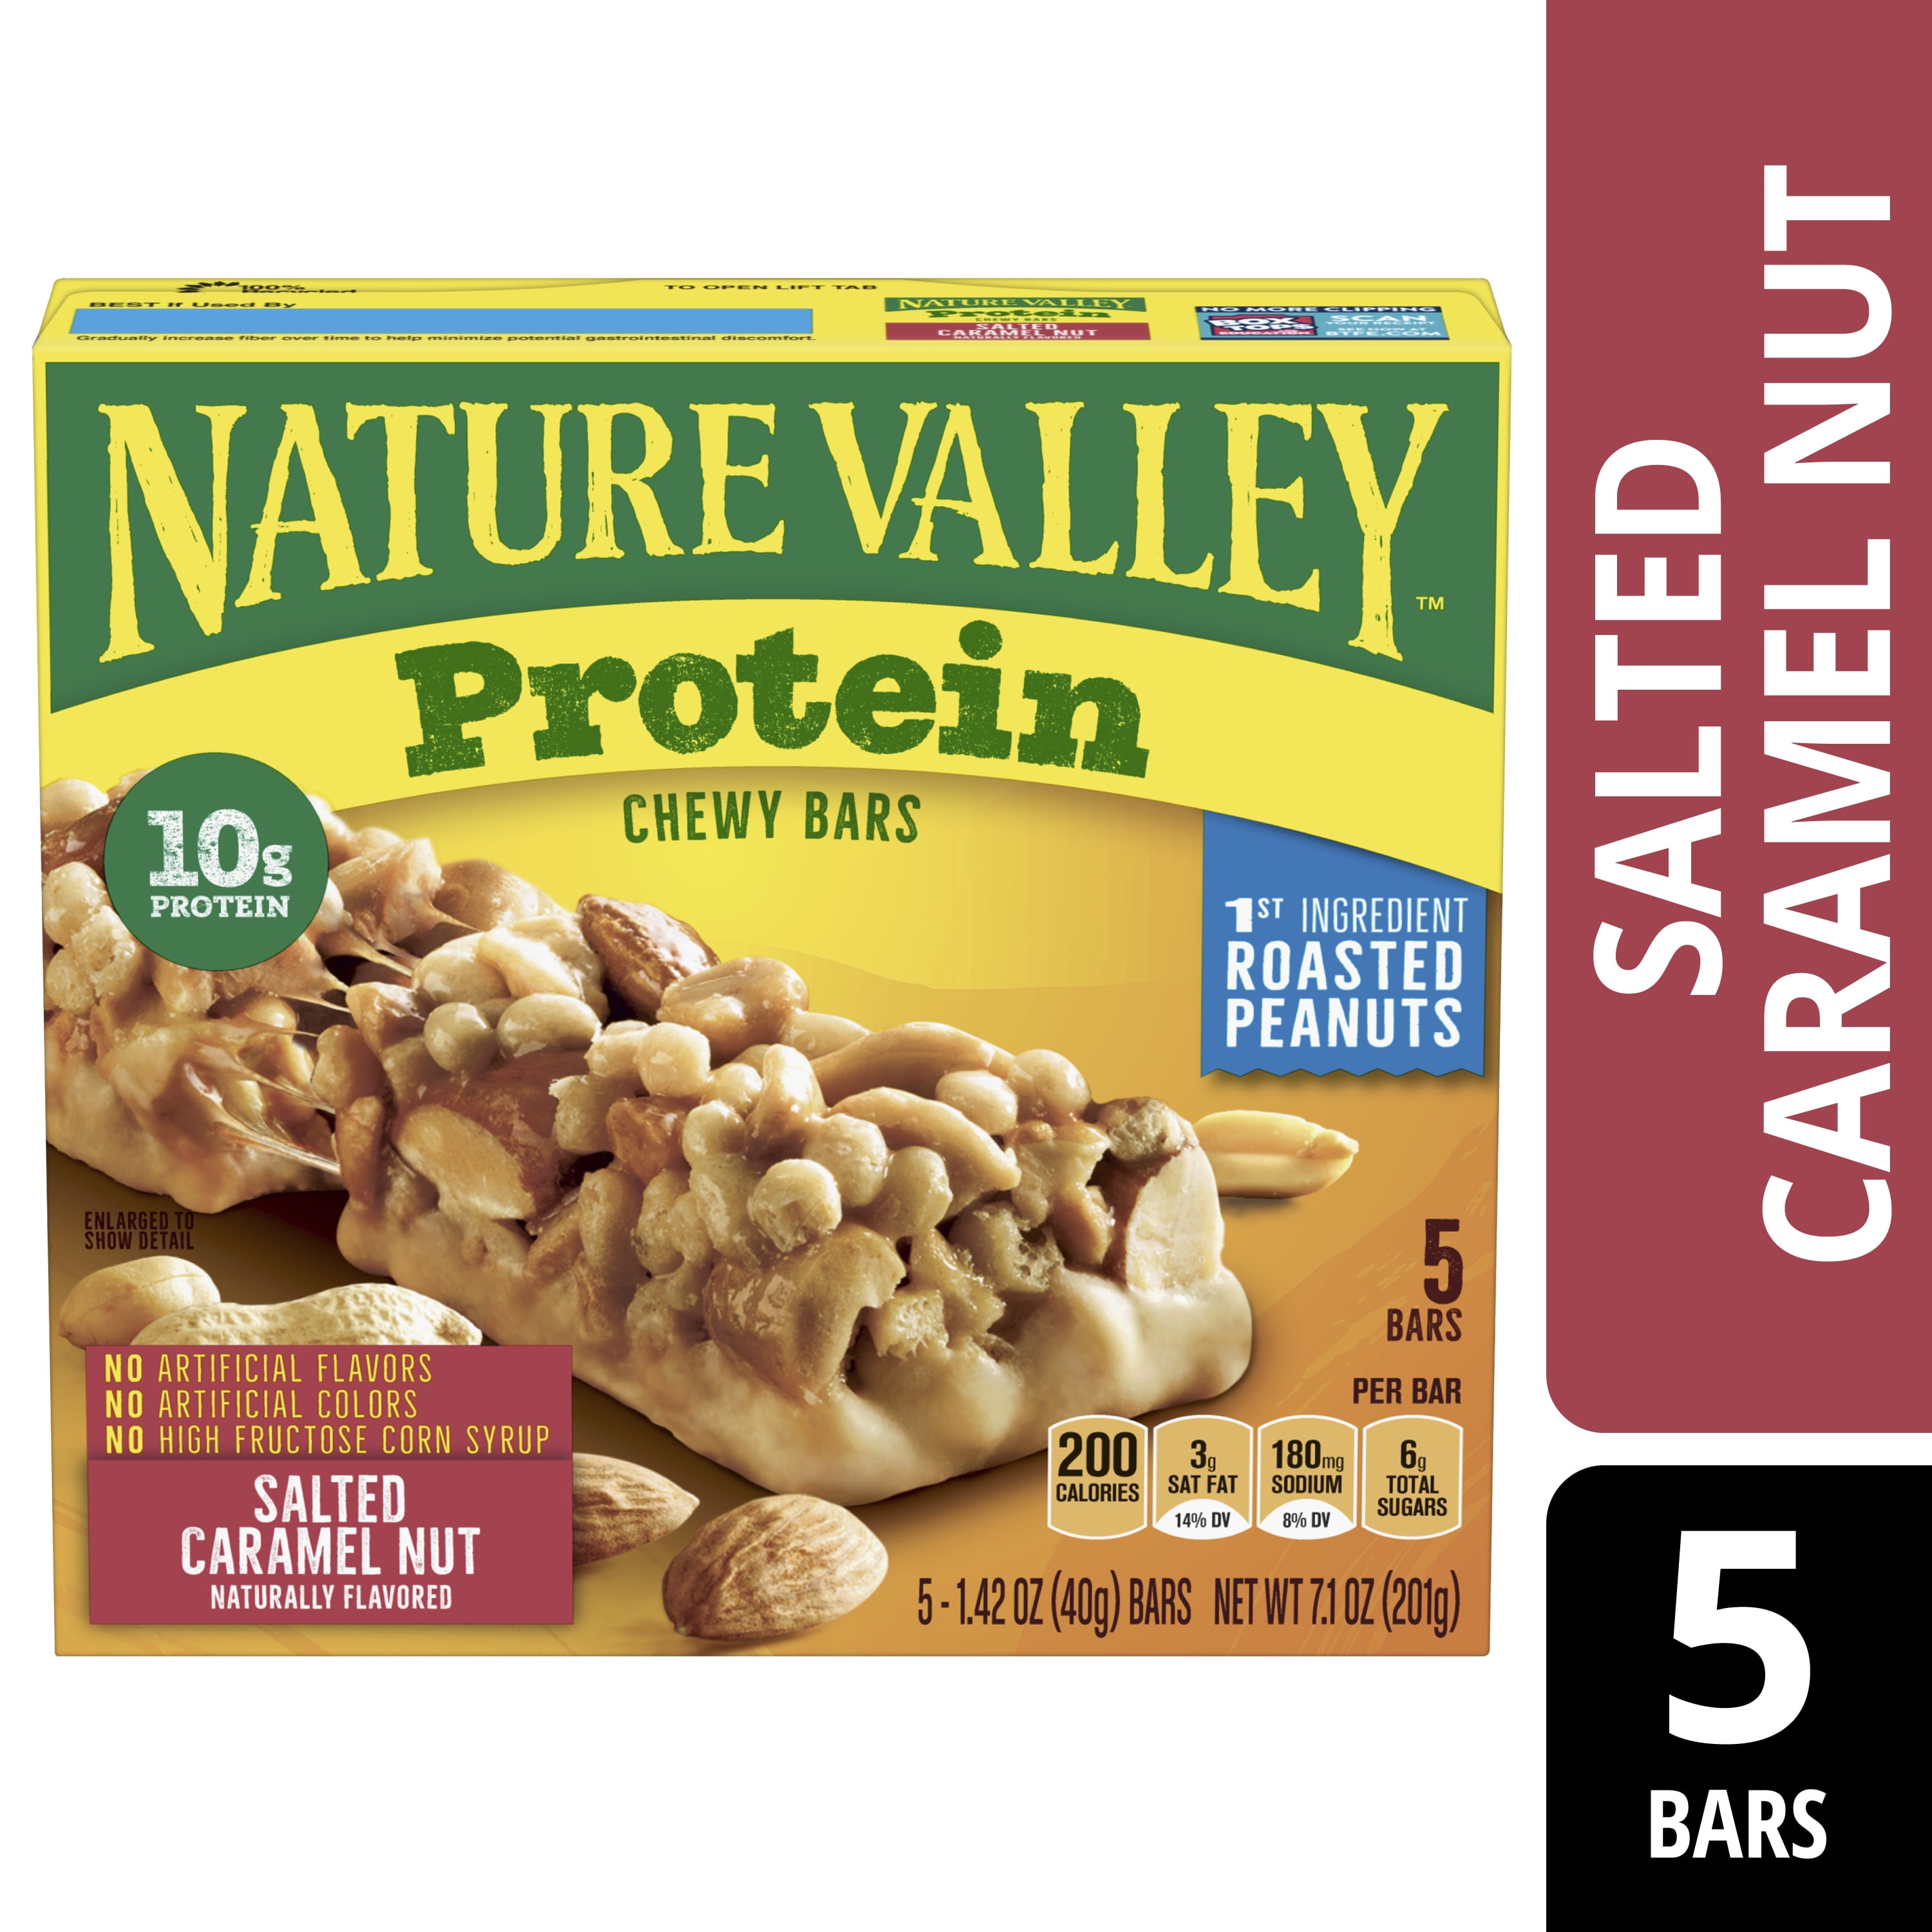 Nature Valley Protein Peanut & Chocolate 4 x 40g Bars